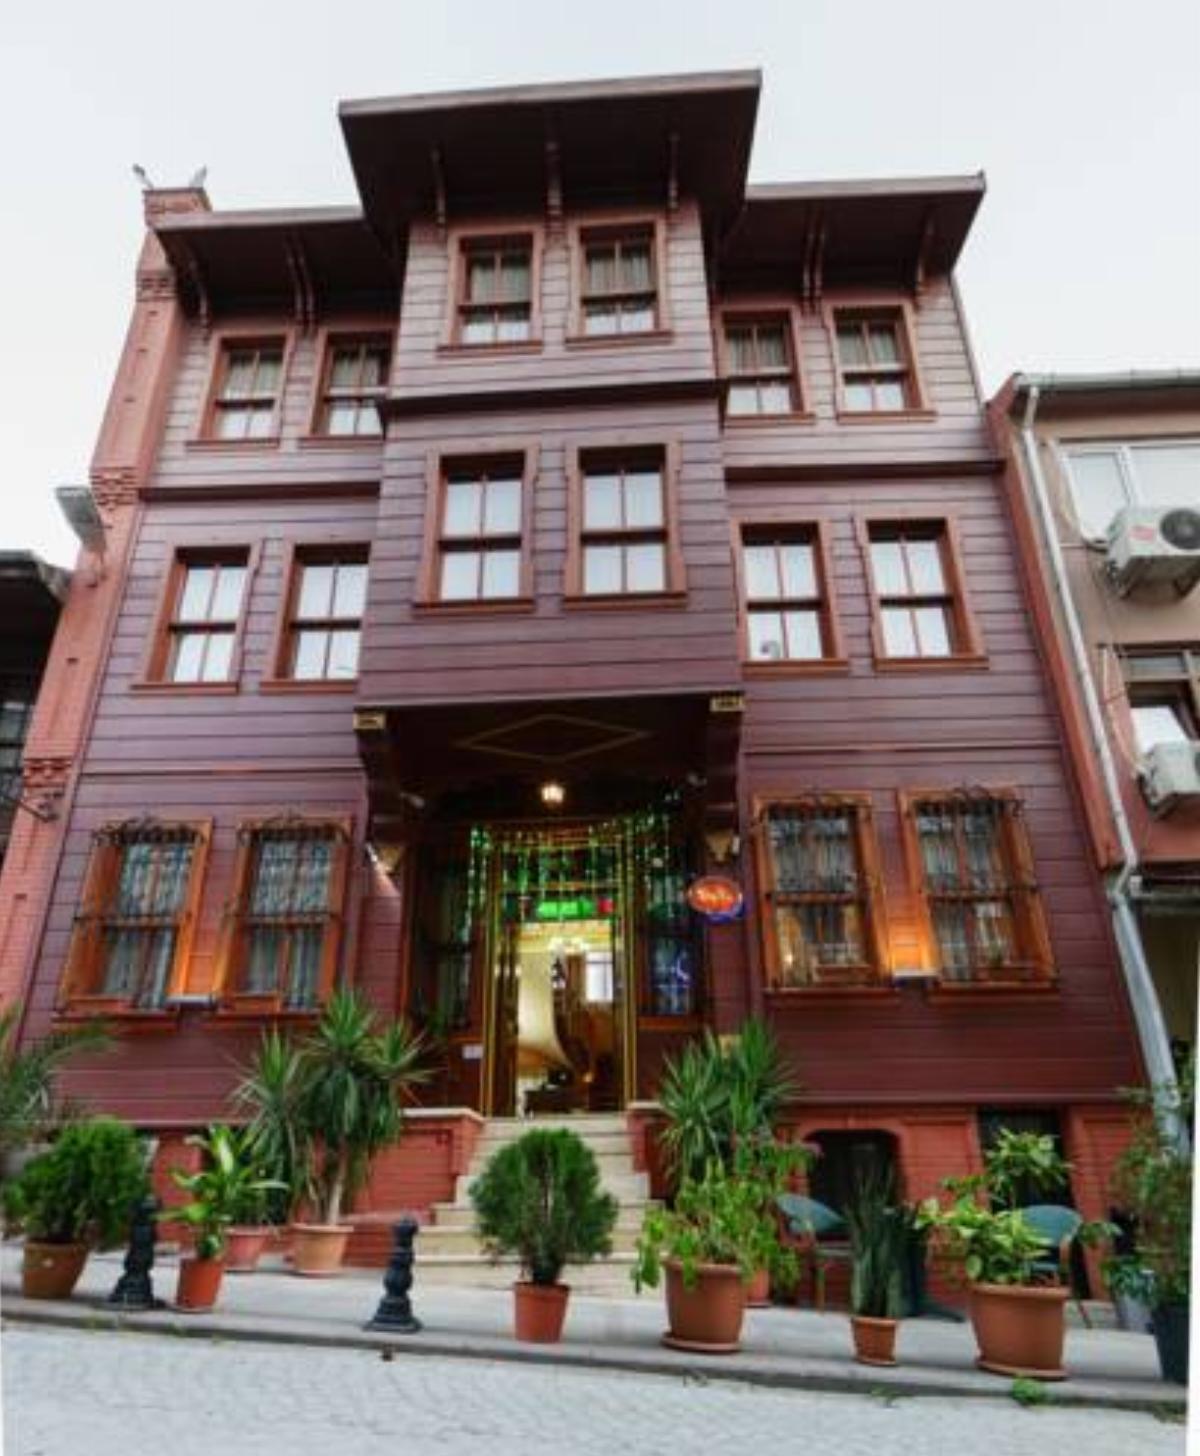 Le Safran Suite Hotel İstanbul Turkey